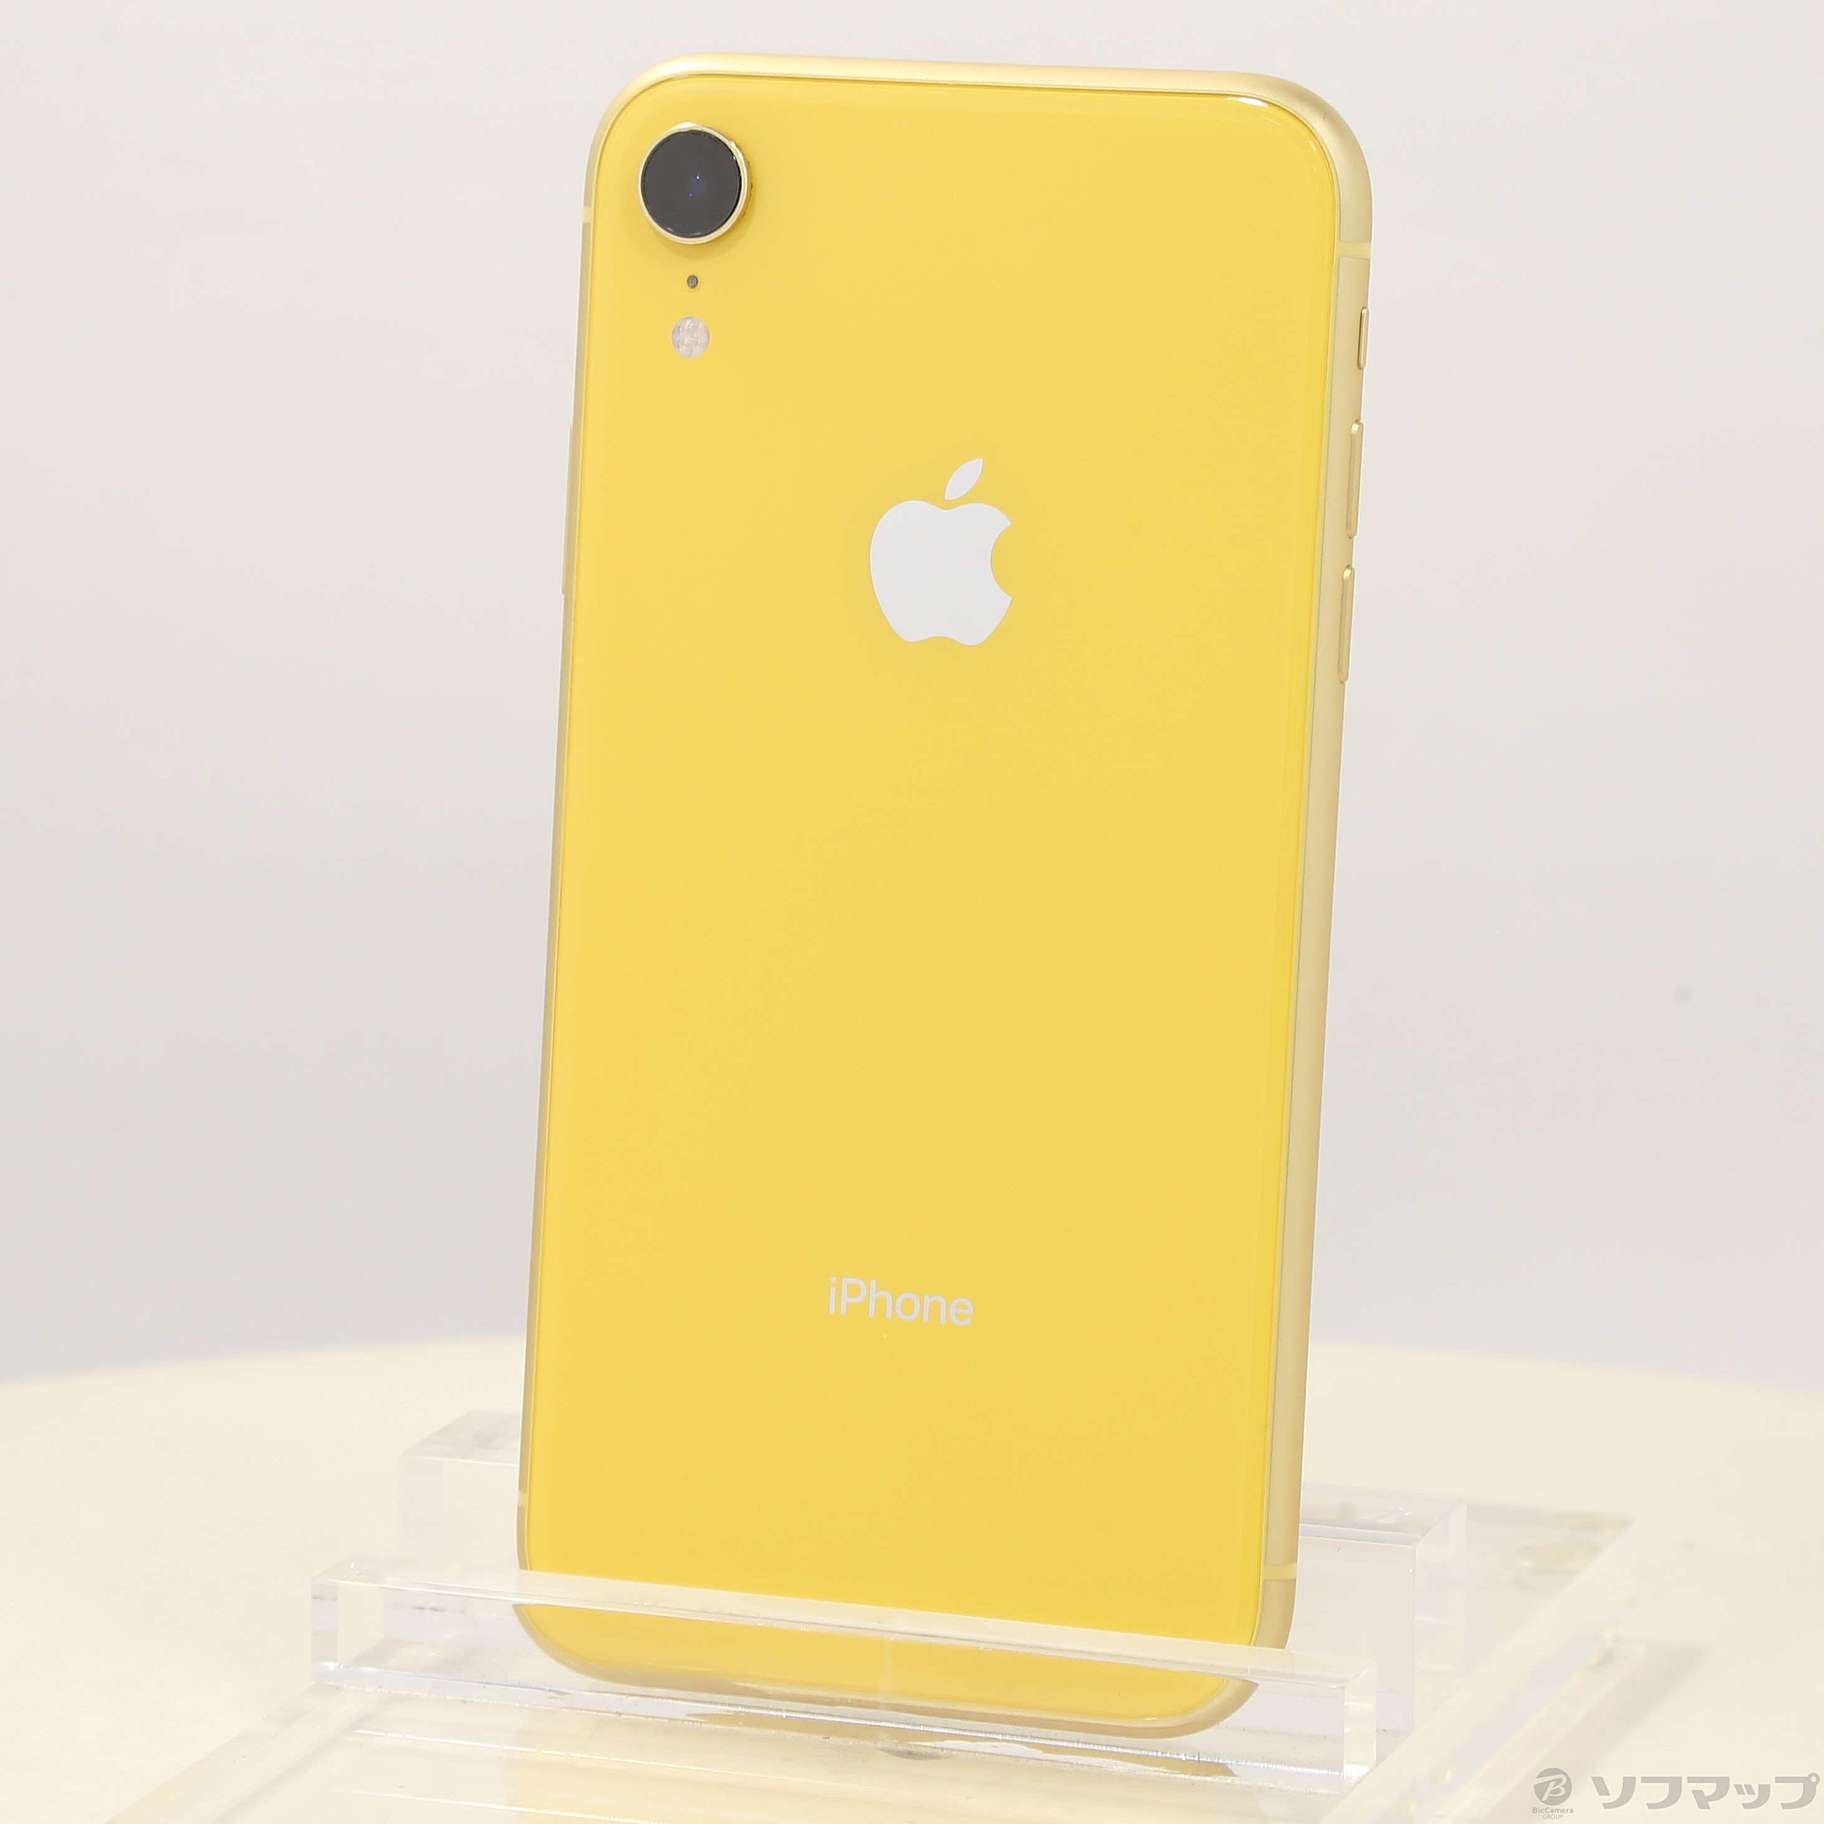 iPhone XR yellow 64GB 新品未開封